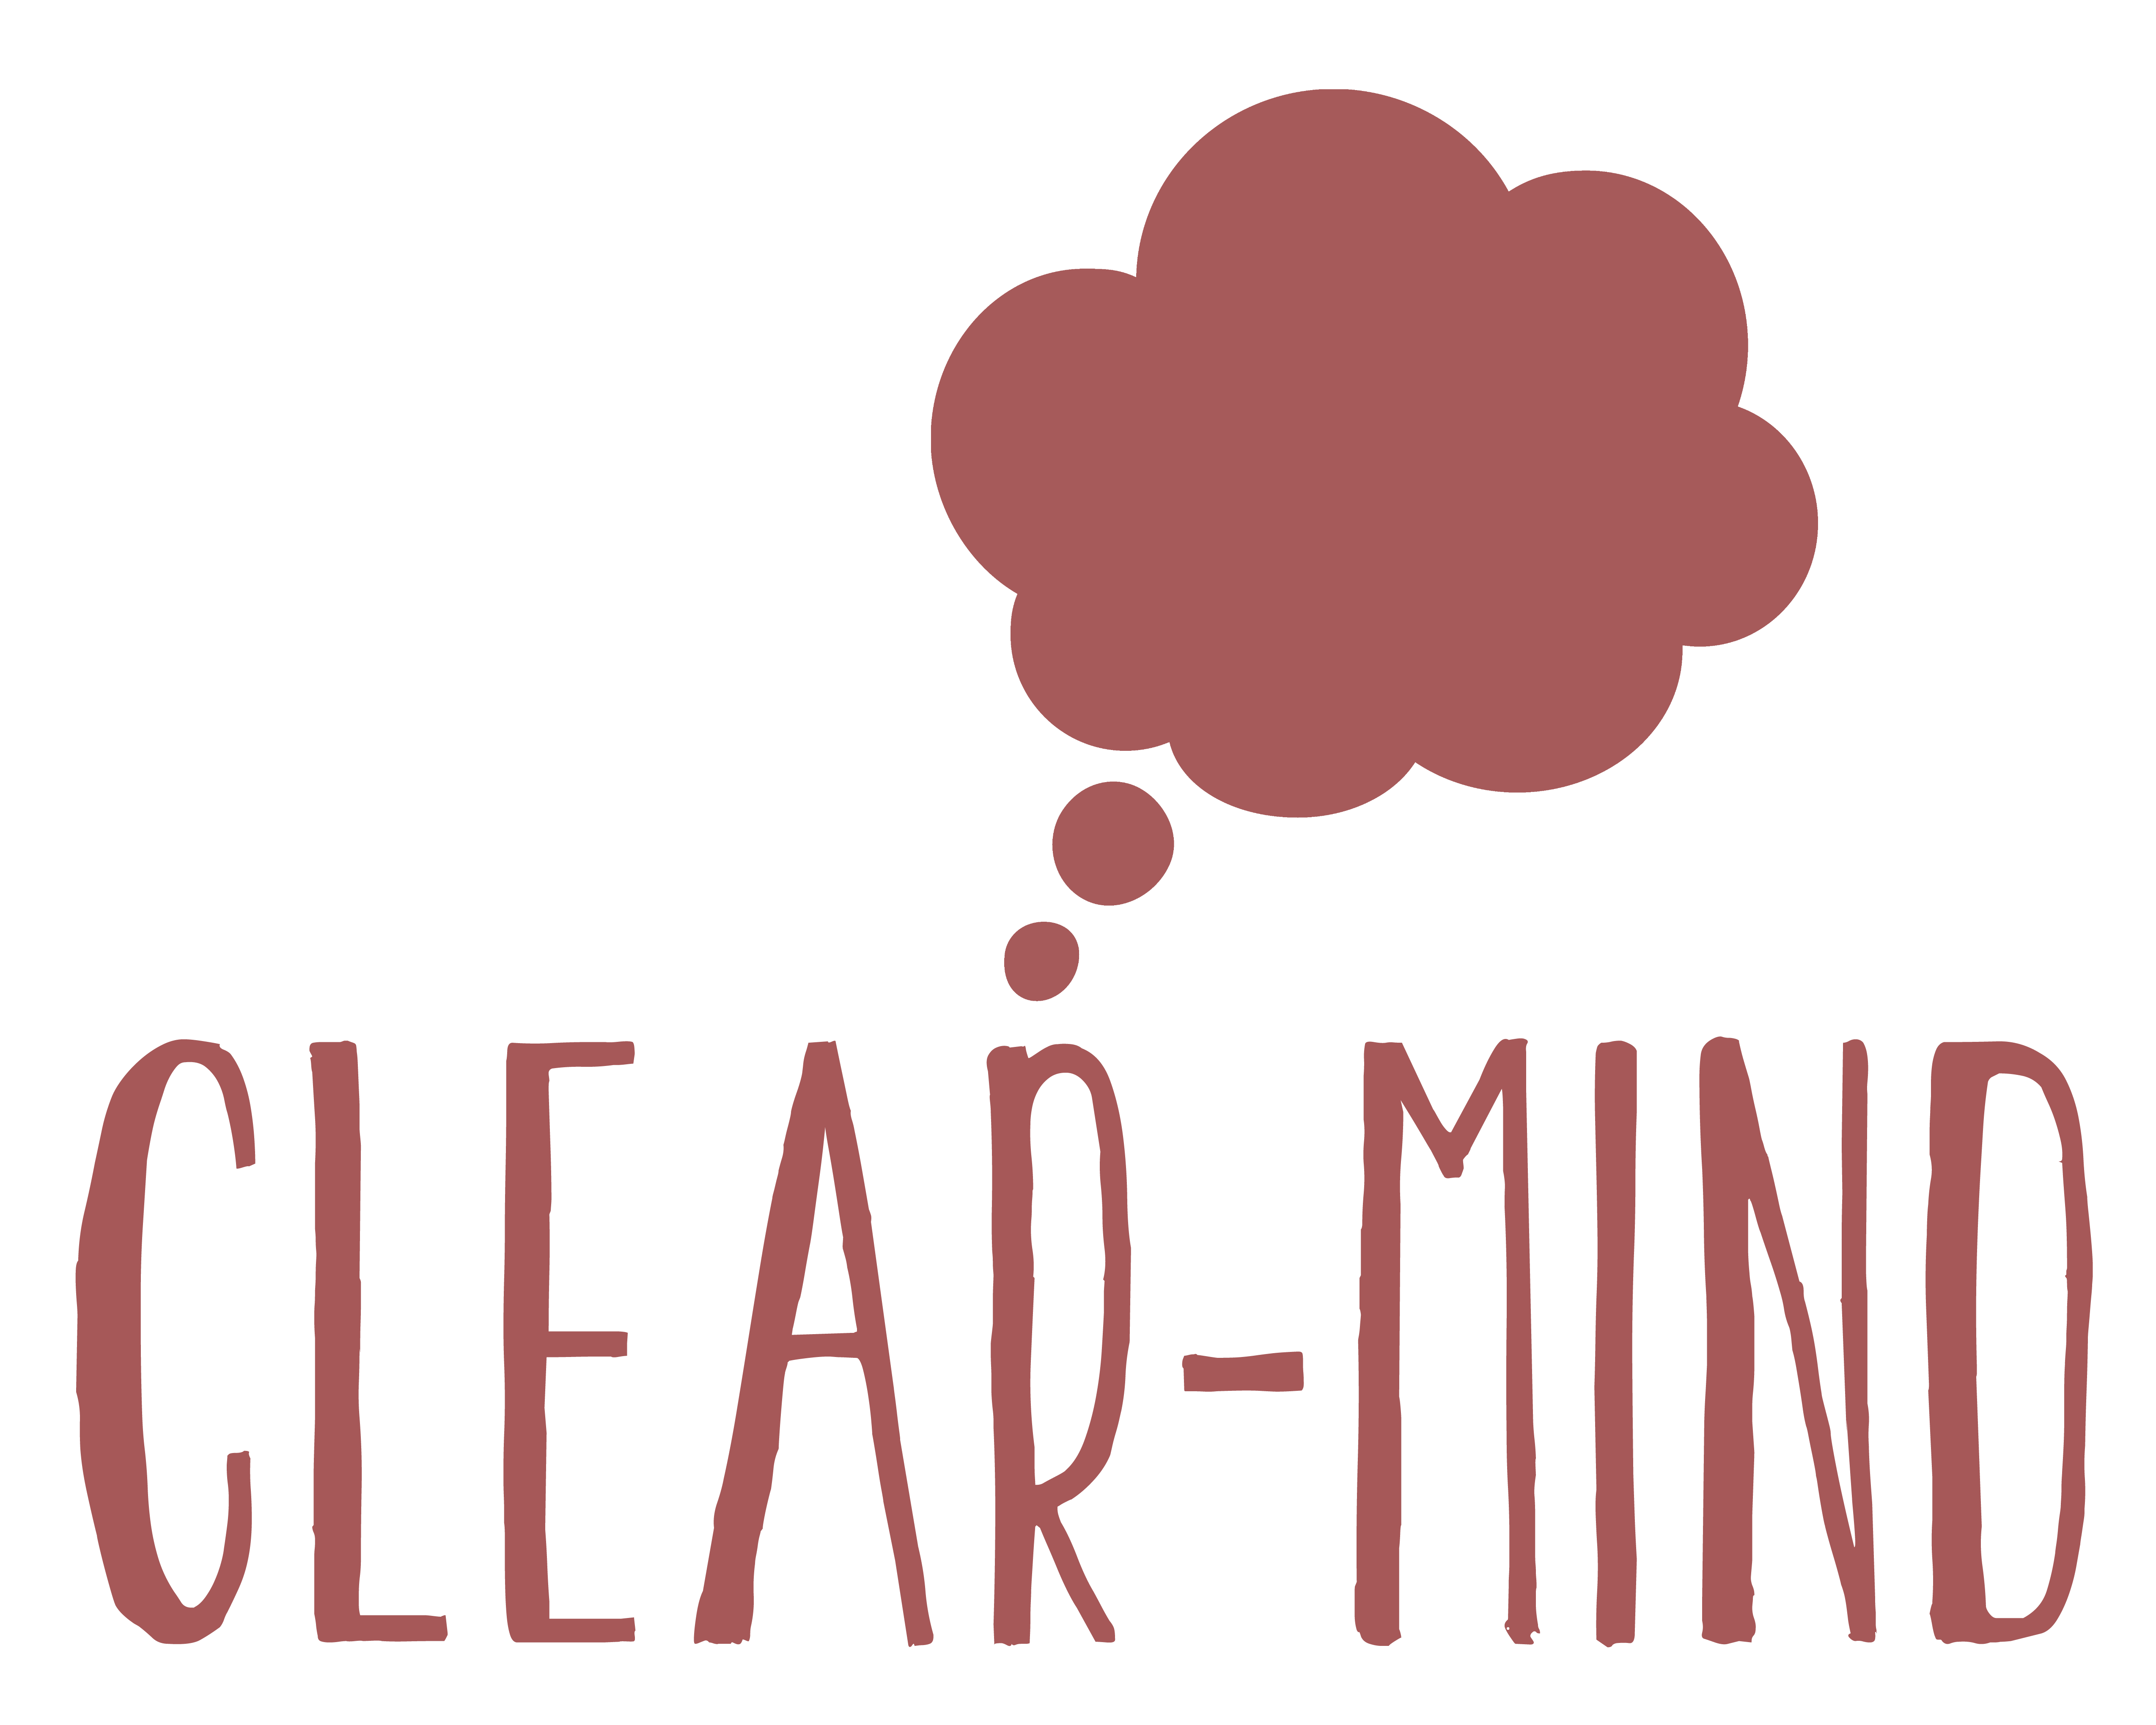 Logo Clear-Mind